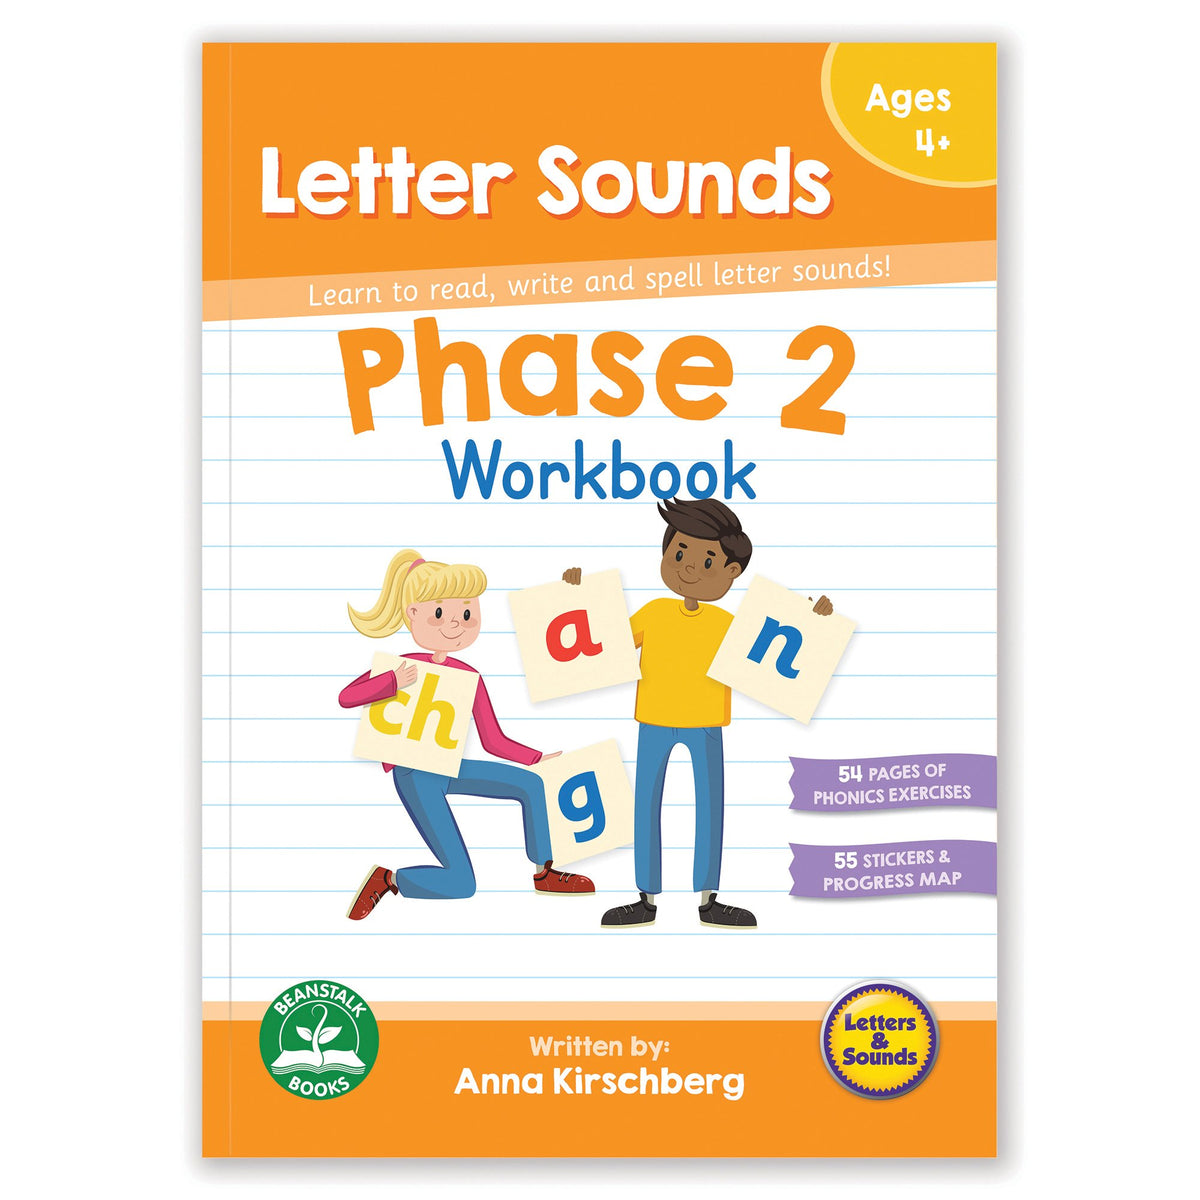 Letters & Sounds Phase 2 Letter Sounds Single Kit